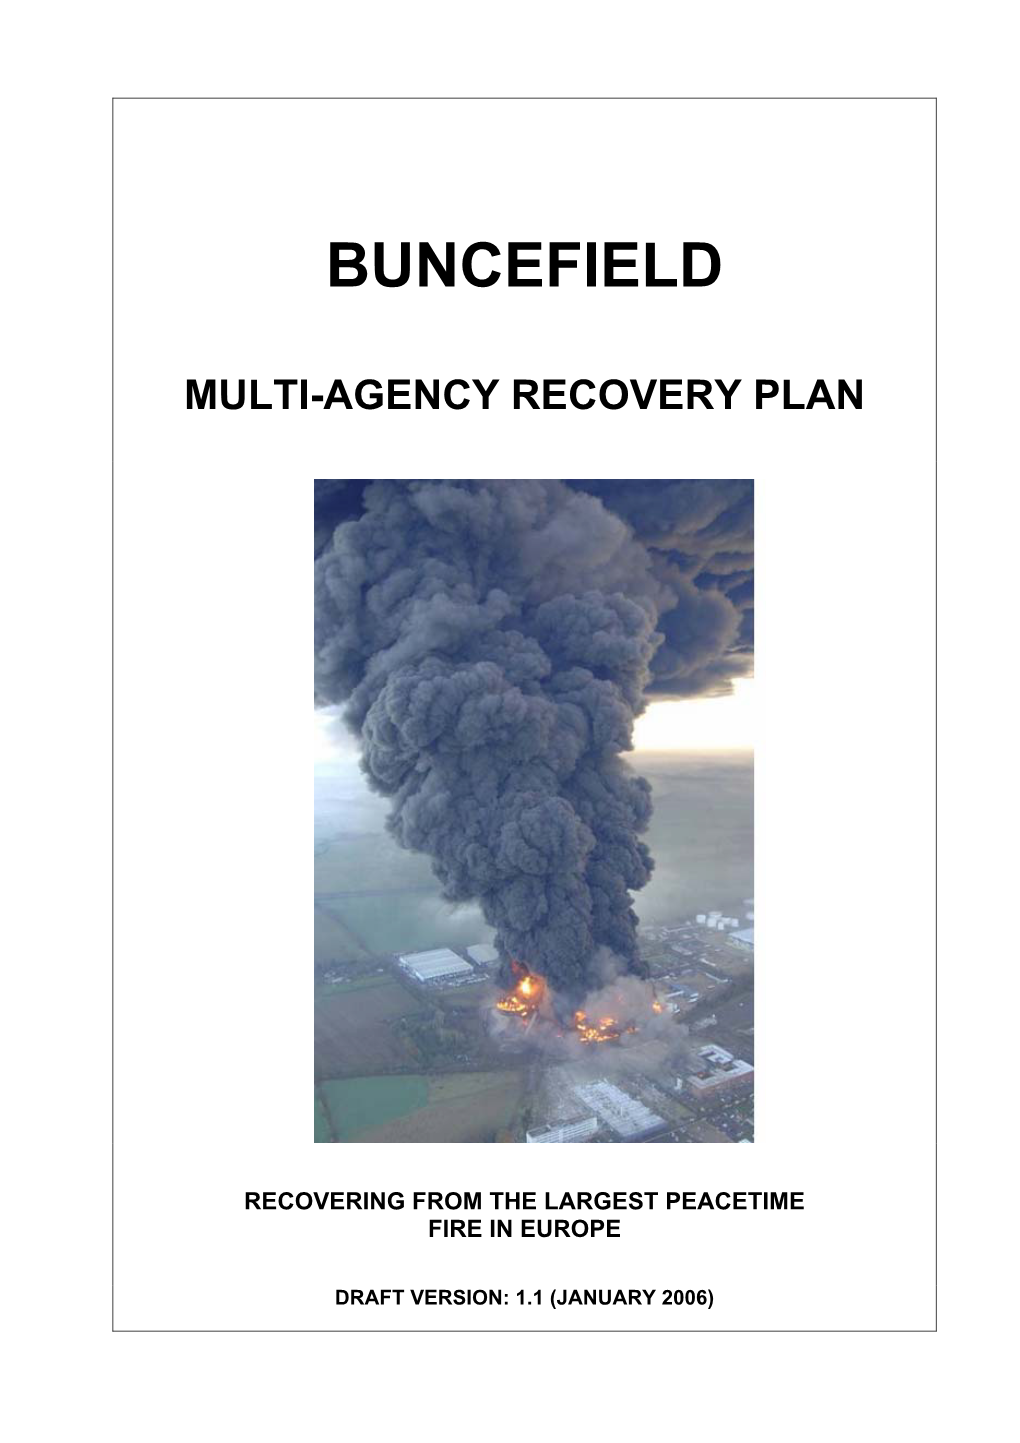 Buncefield Multi-Agency Recovery Plan – Draft Version 1.1 (January 2006)